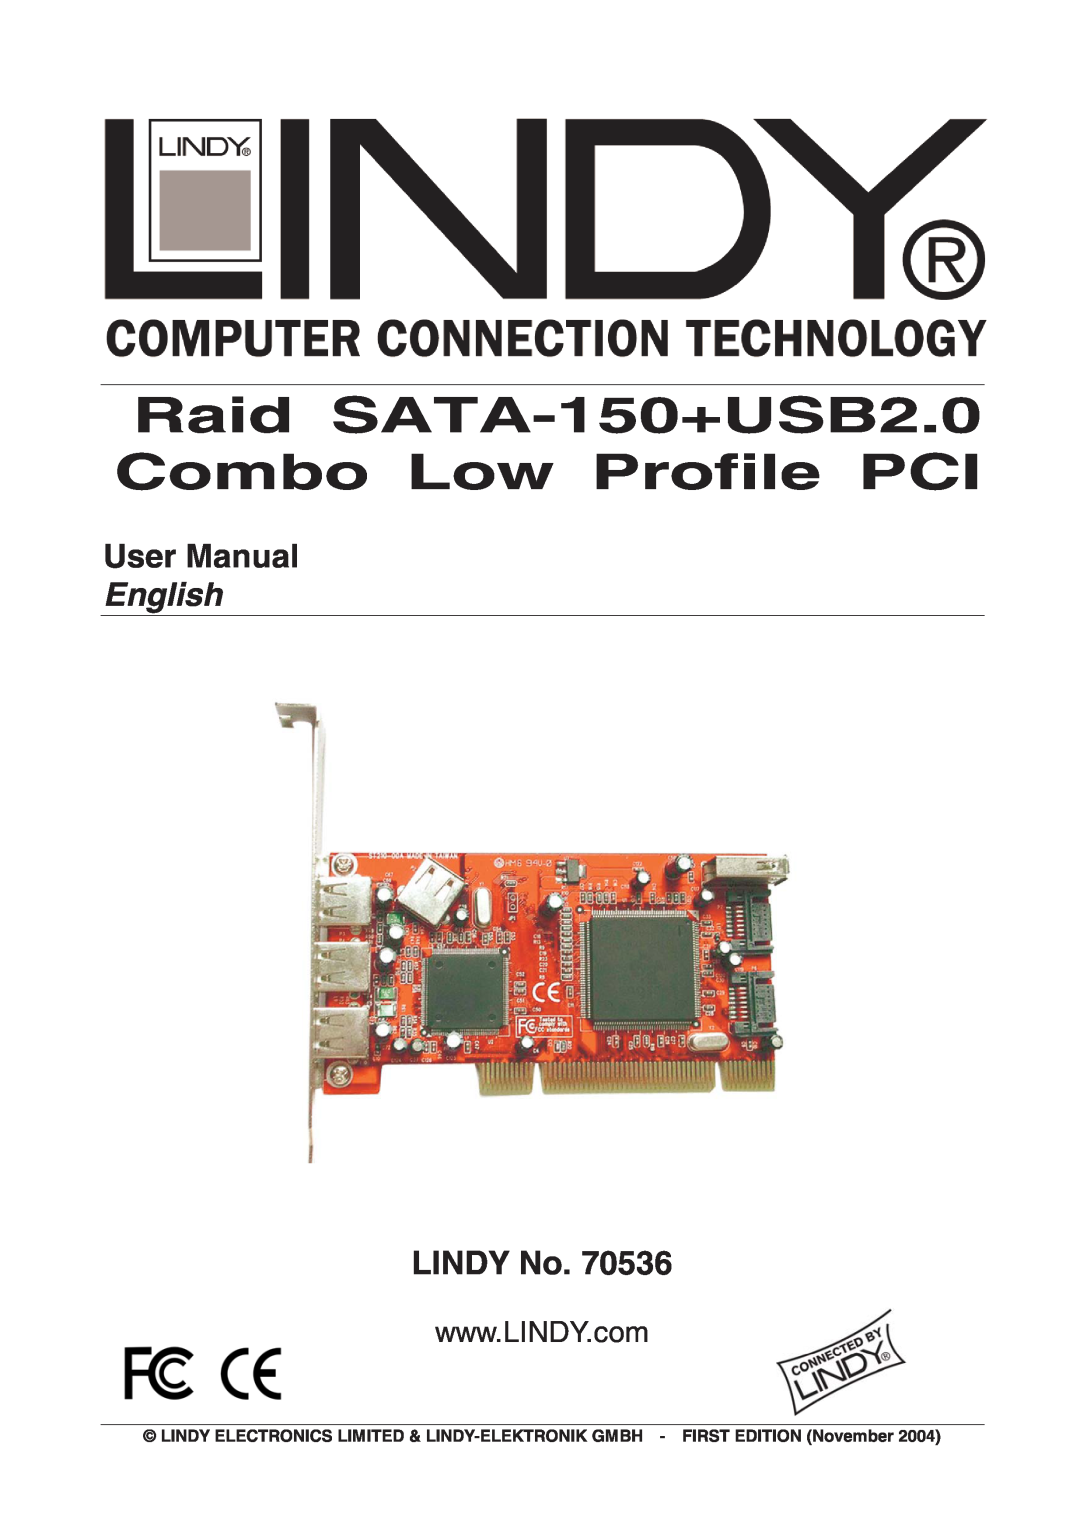 Lindy 70536 user manual User Manual, LINDY No, Raid SATA-150+USB2.0 Combo Low Profile PCI, English 